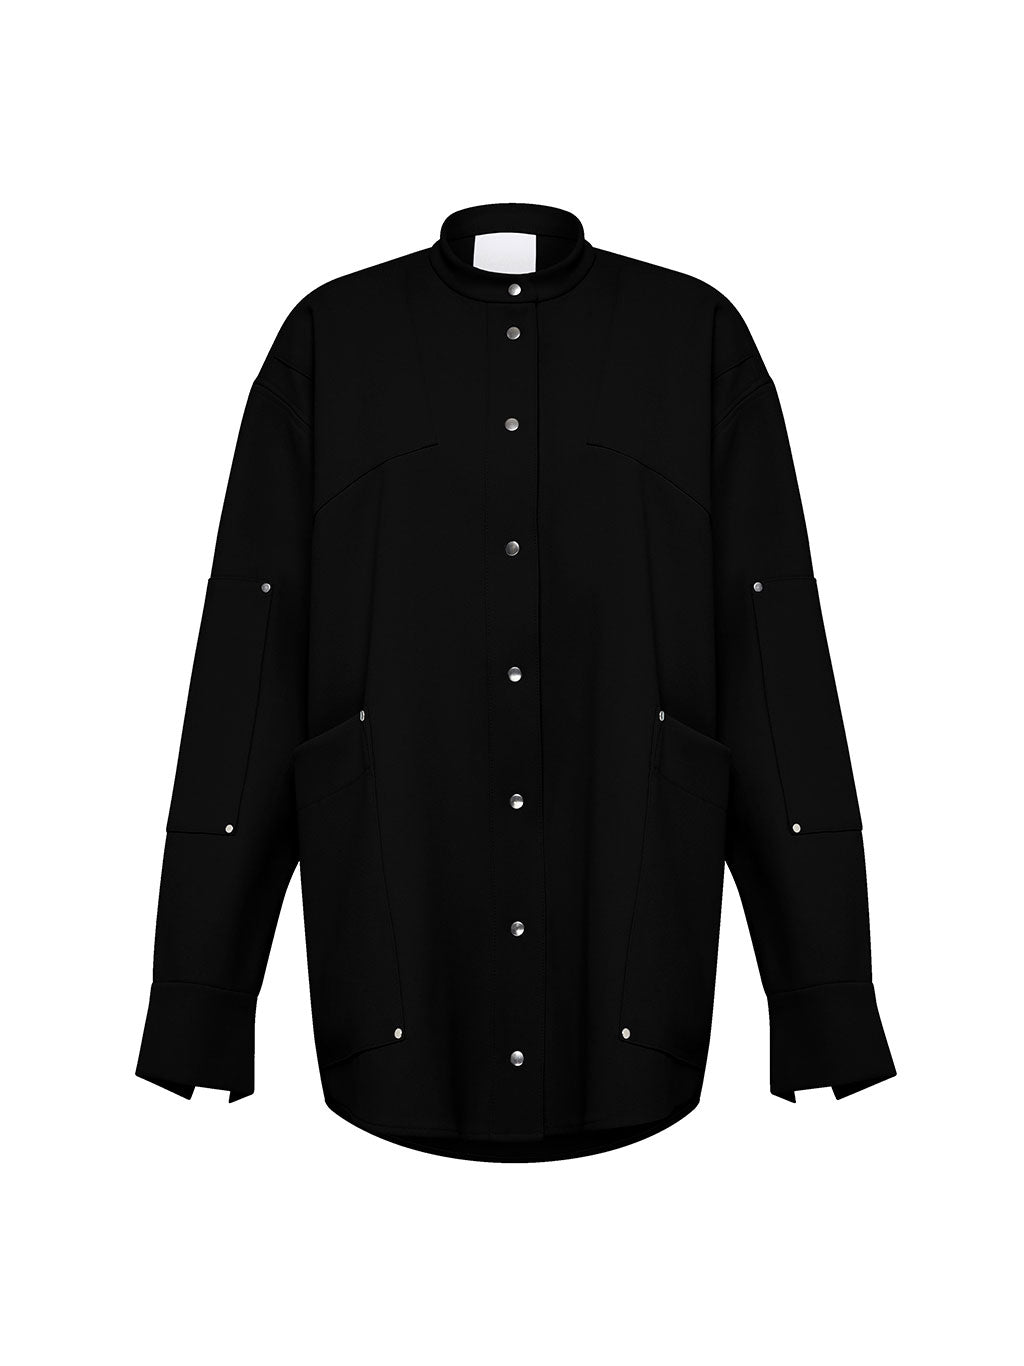 Josephine Shirt in Black. Flatlay